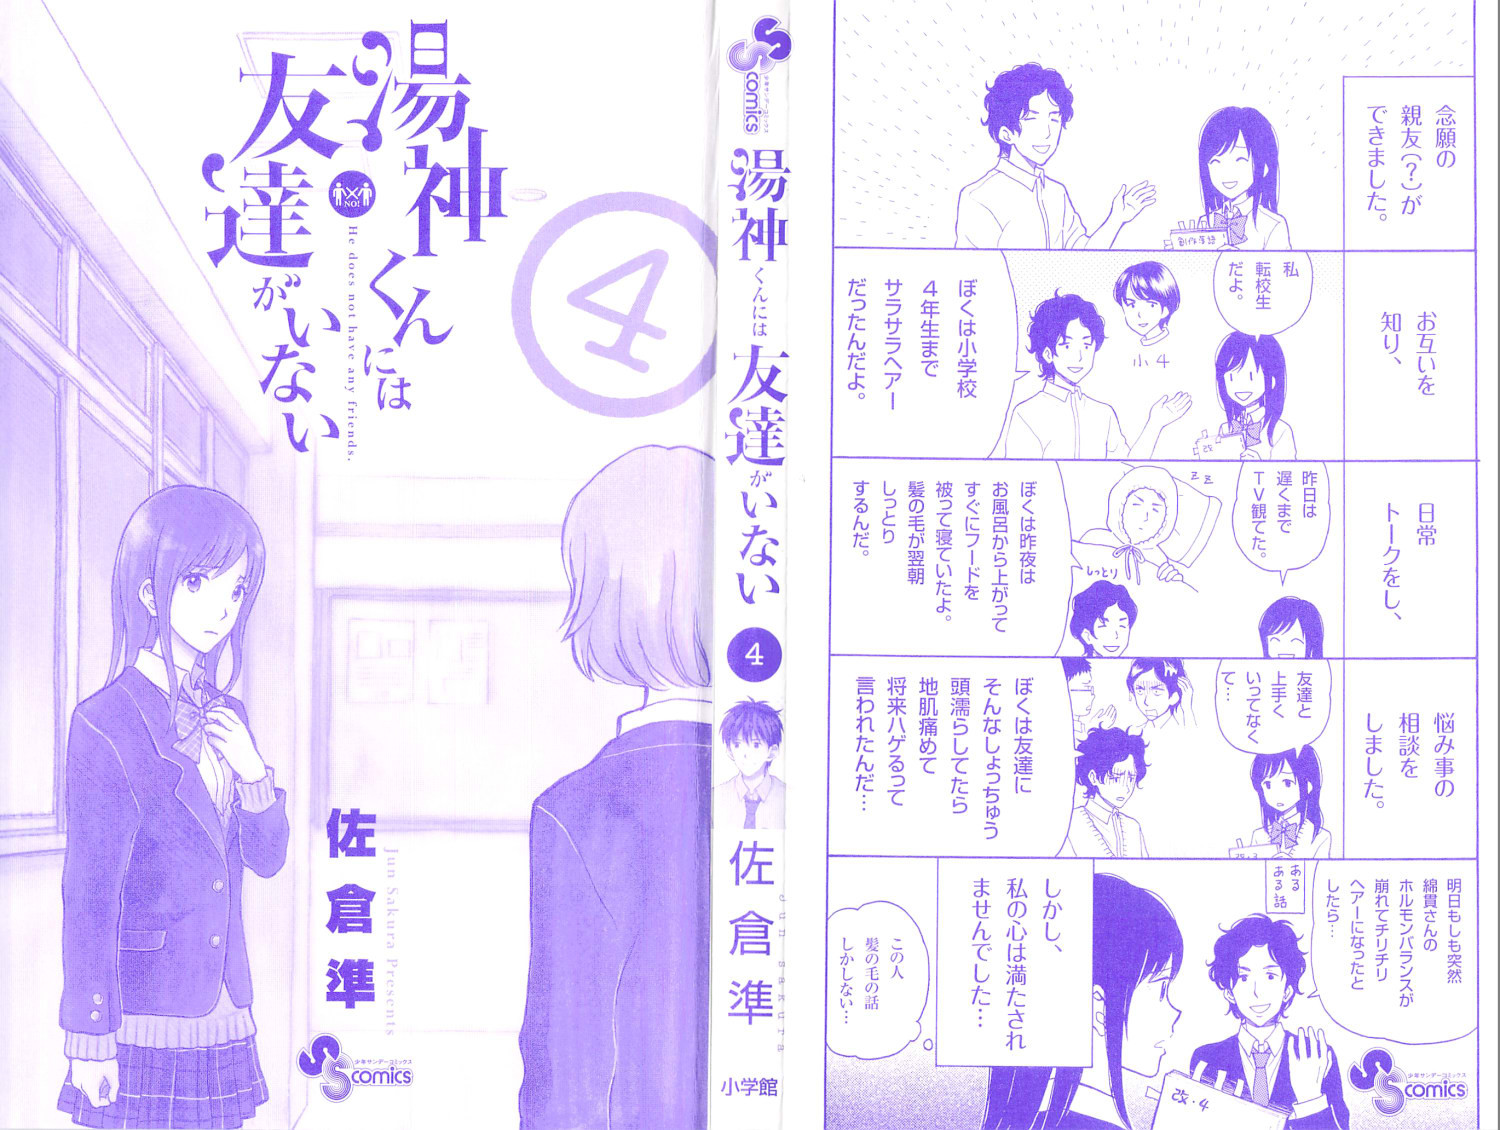 Yugami-kun ni wa Tomodachi ga Inai - Chapter 017 - Page 2